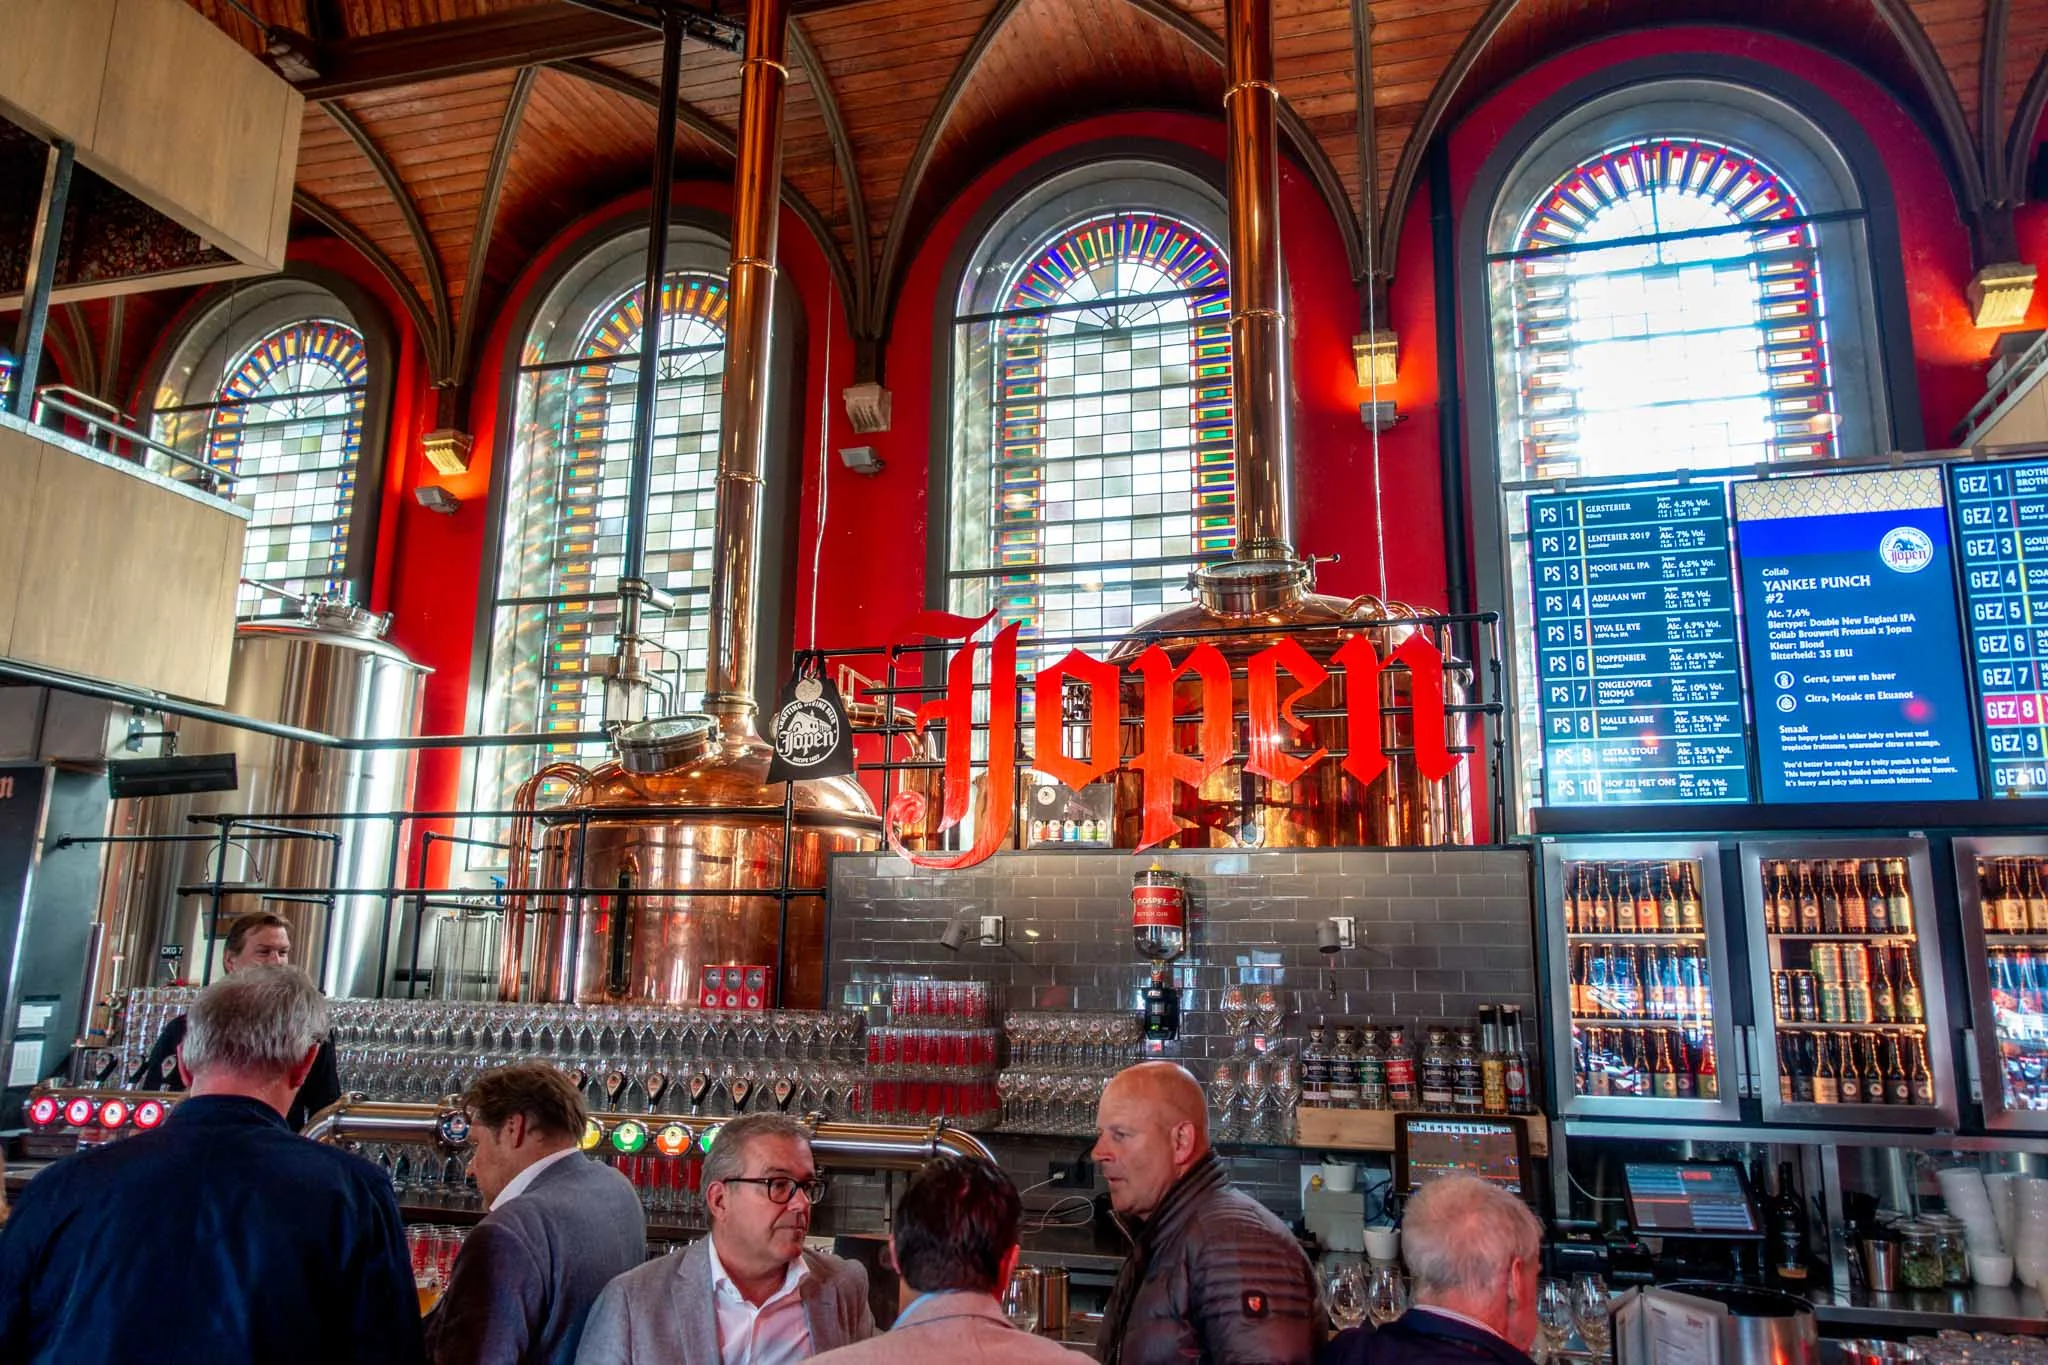 Bar inside a former church transformed into a brewery